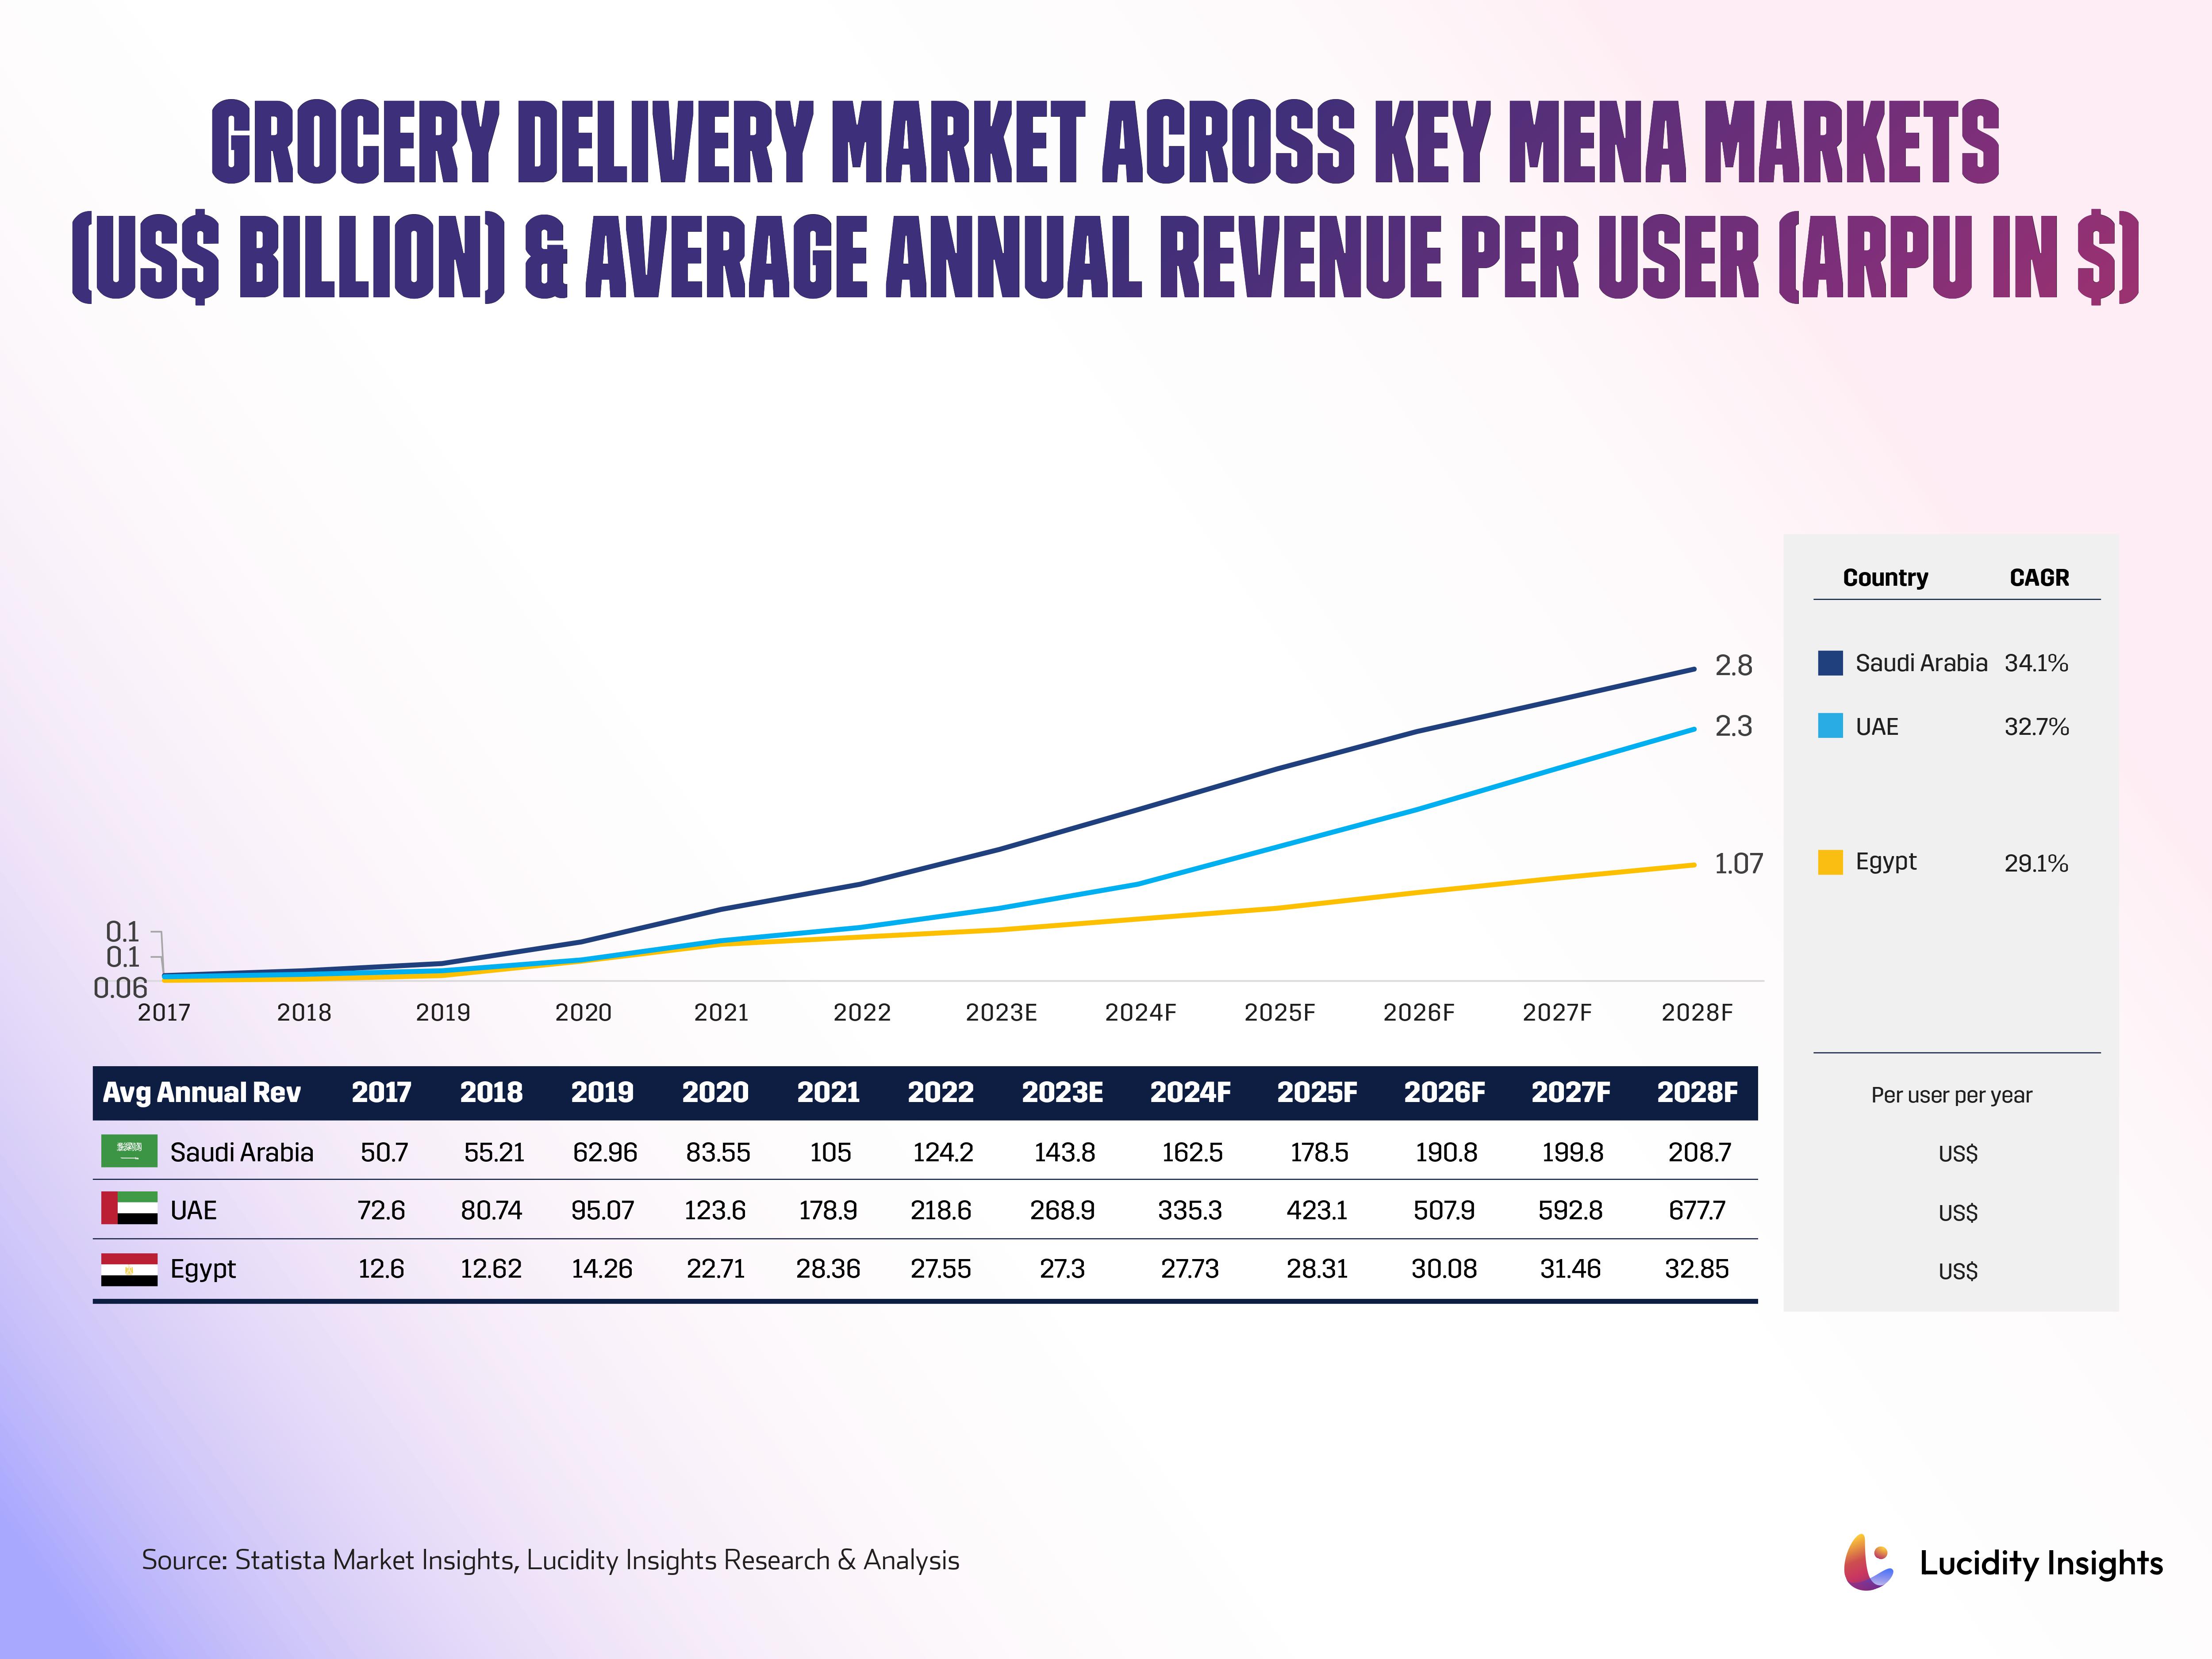 Grocery Delivery Market Across Key MENA Markets (US$ billion) & Average Annual Revenue per User (ARPU in $)